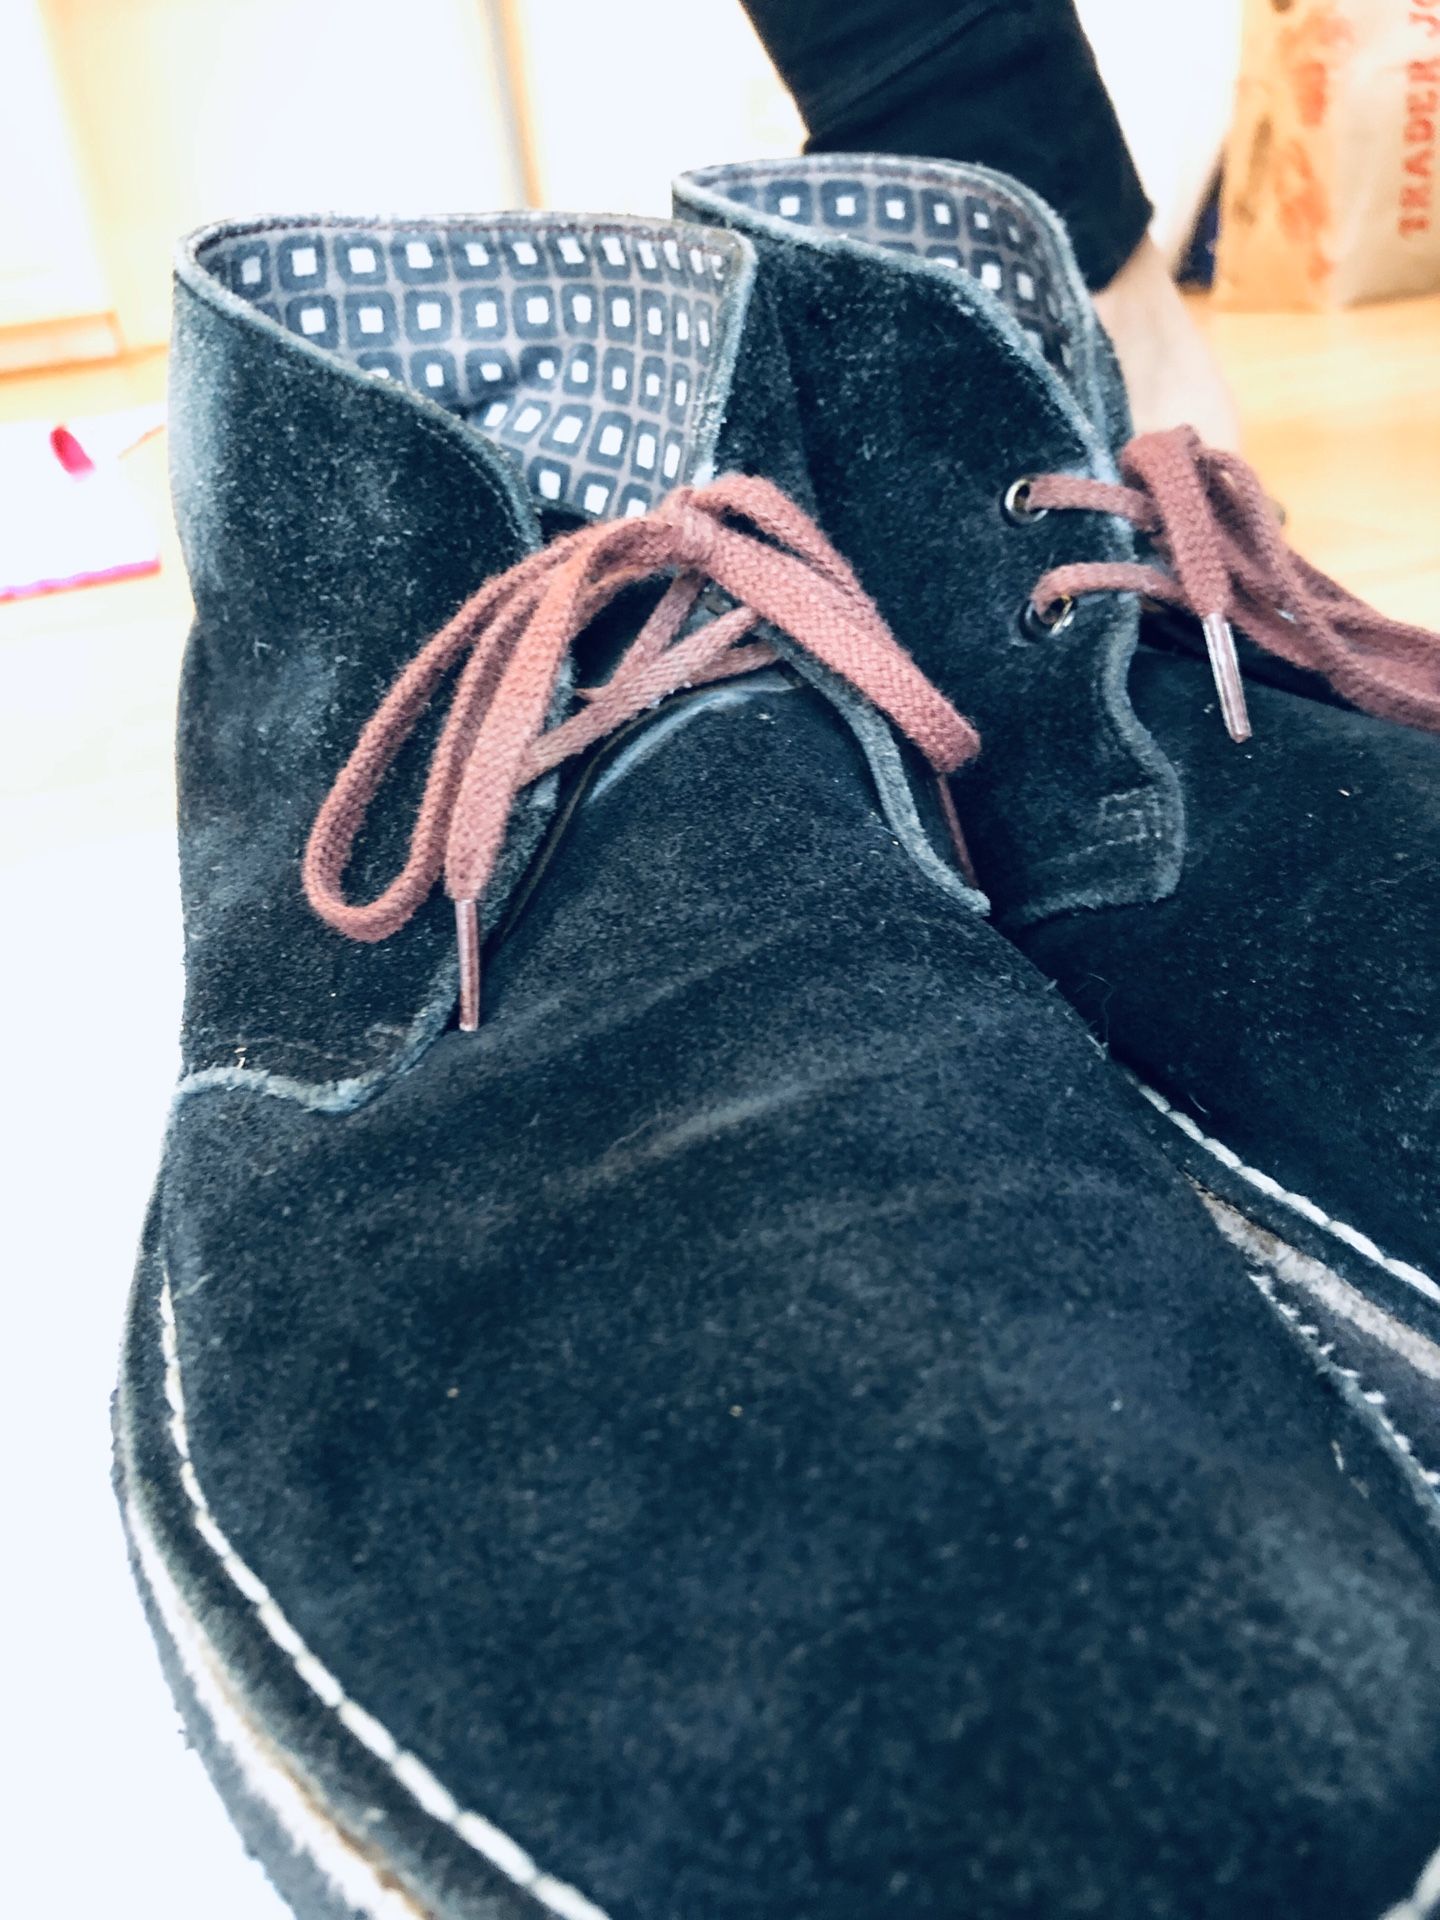 Clark’s shoes boot